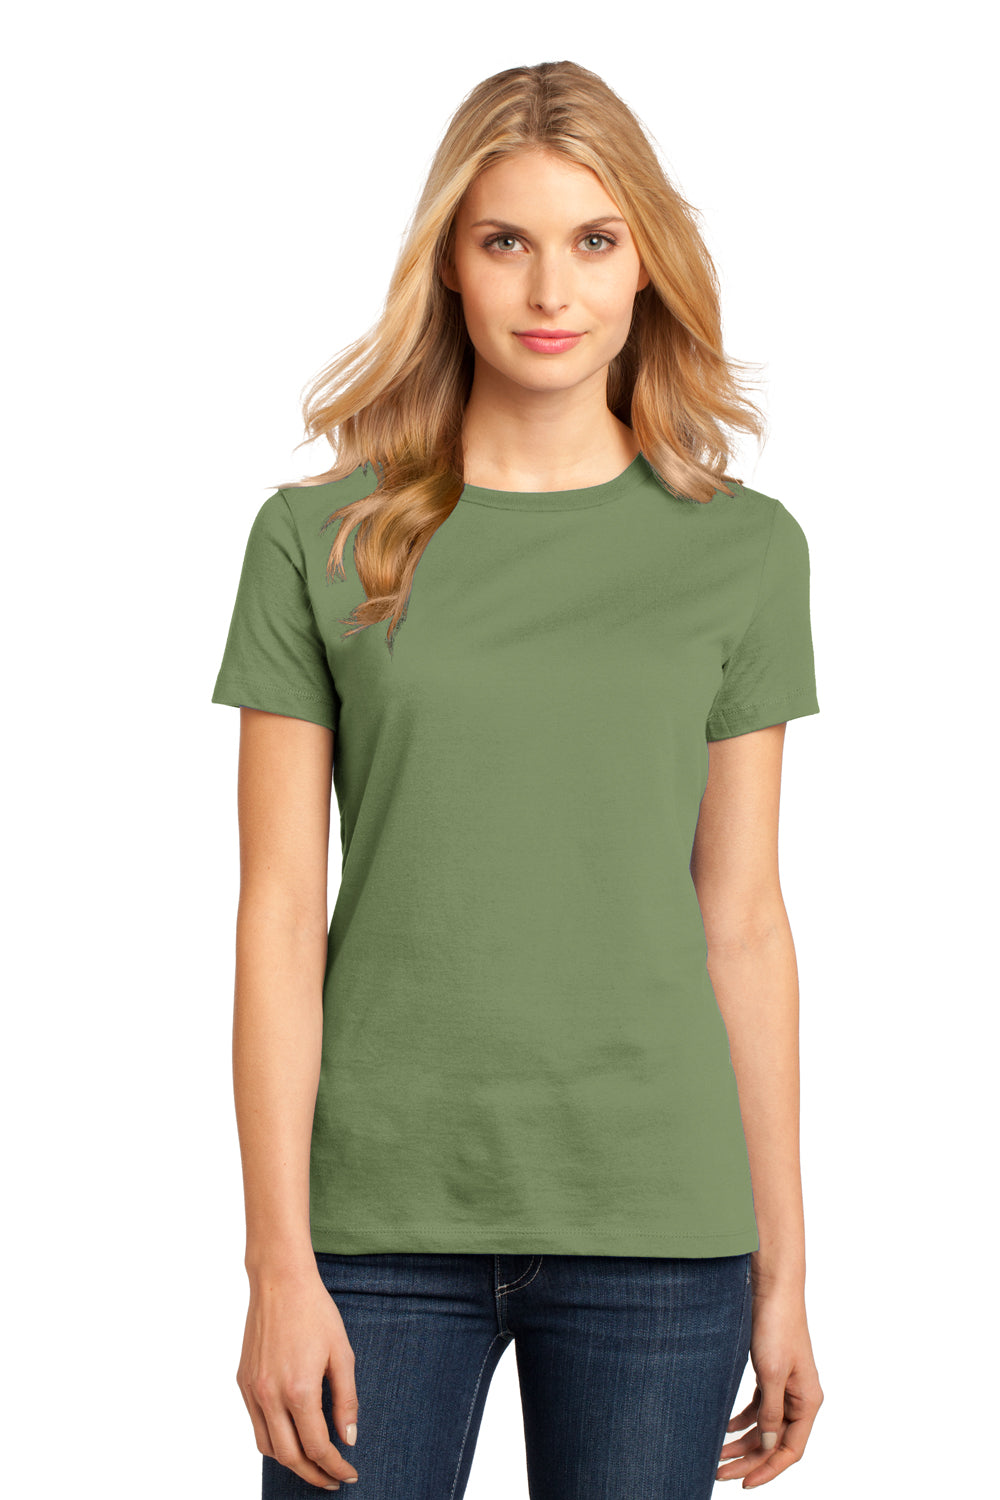 District DM104L Womens Perfect Weight Short Sleeve Crewneck T-Shirt Fatigue Green Front